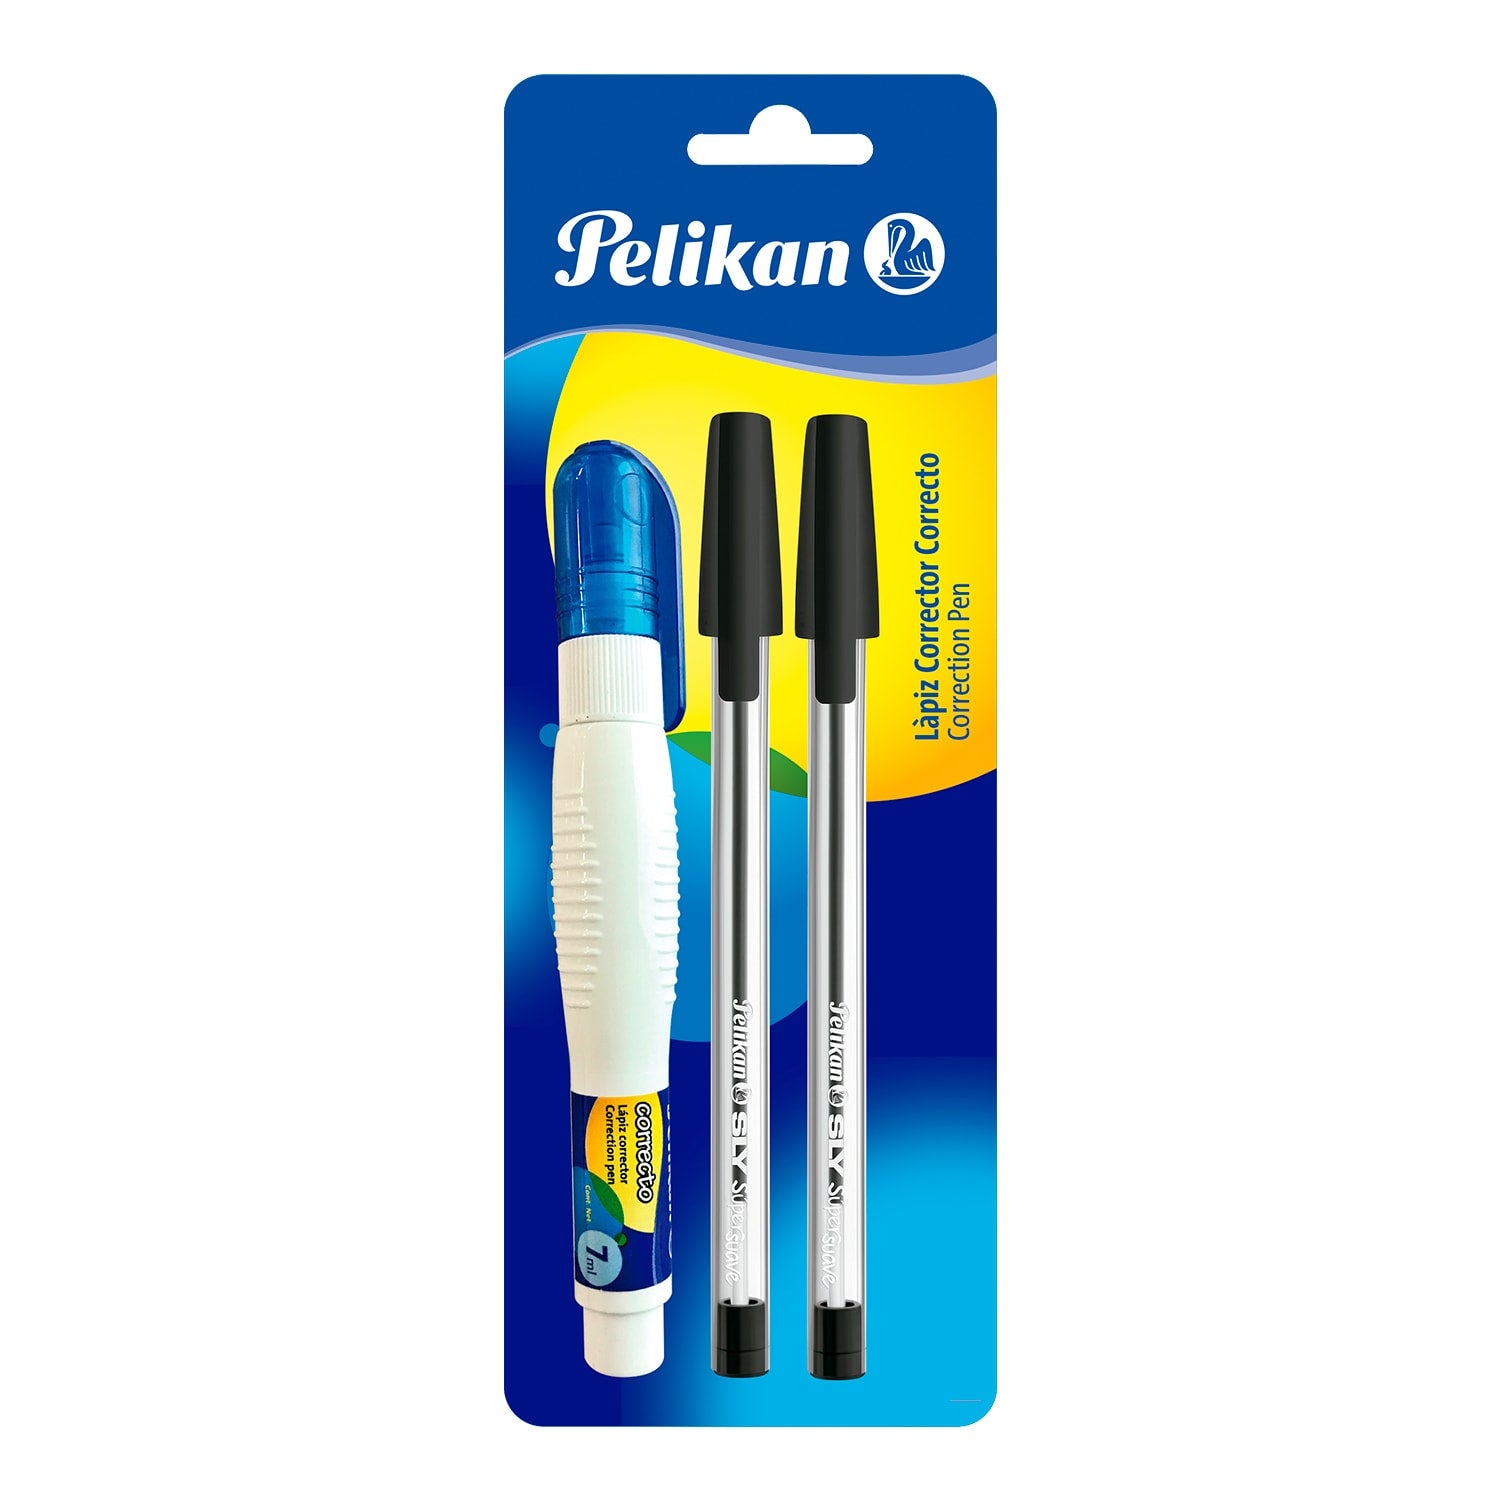 Pelikan Correction Pen & Gel Pen, Bonus: 1 Pen Free